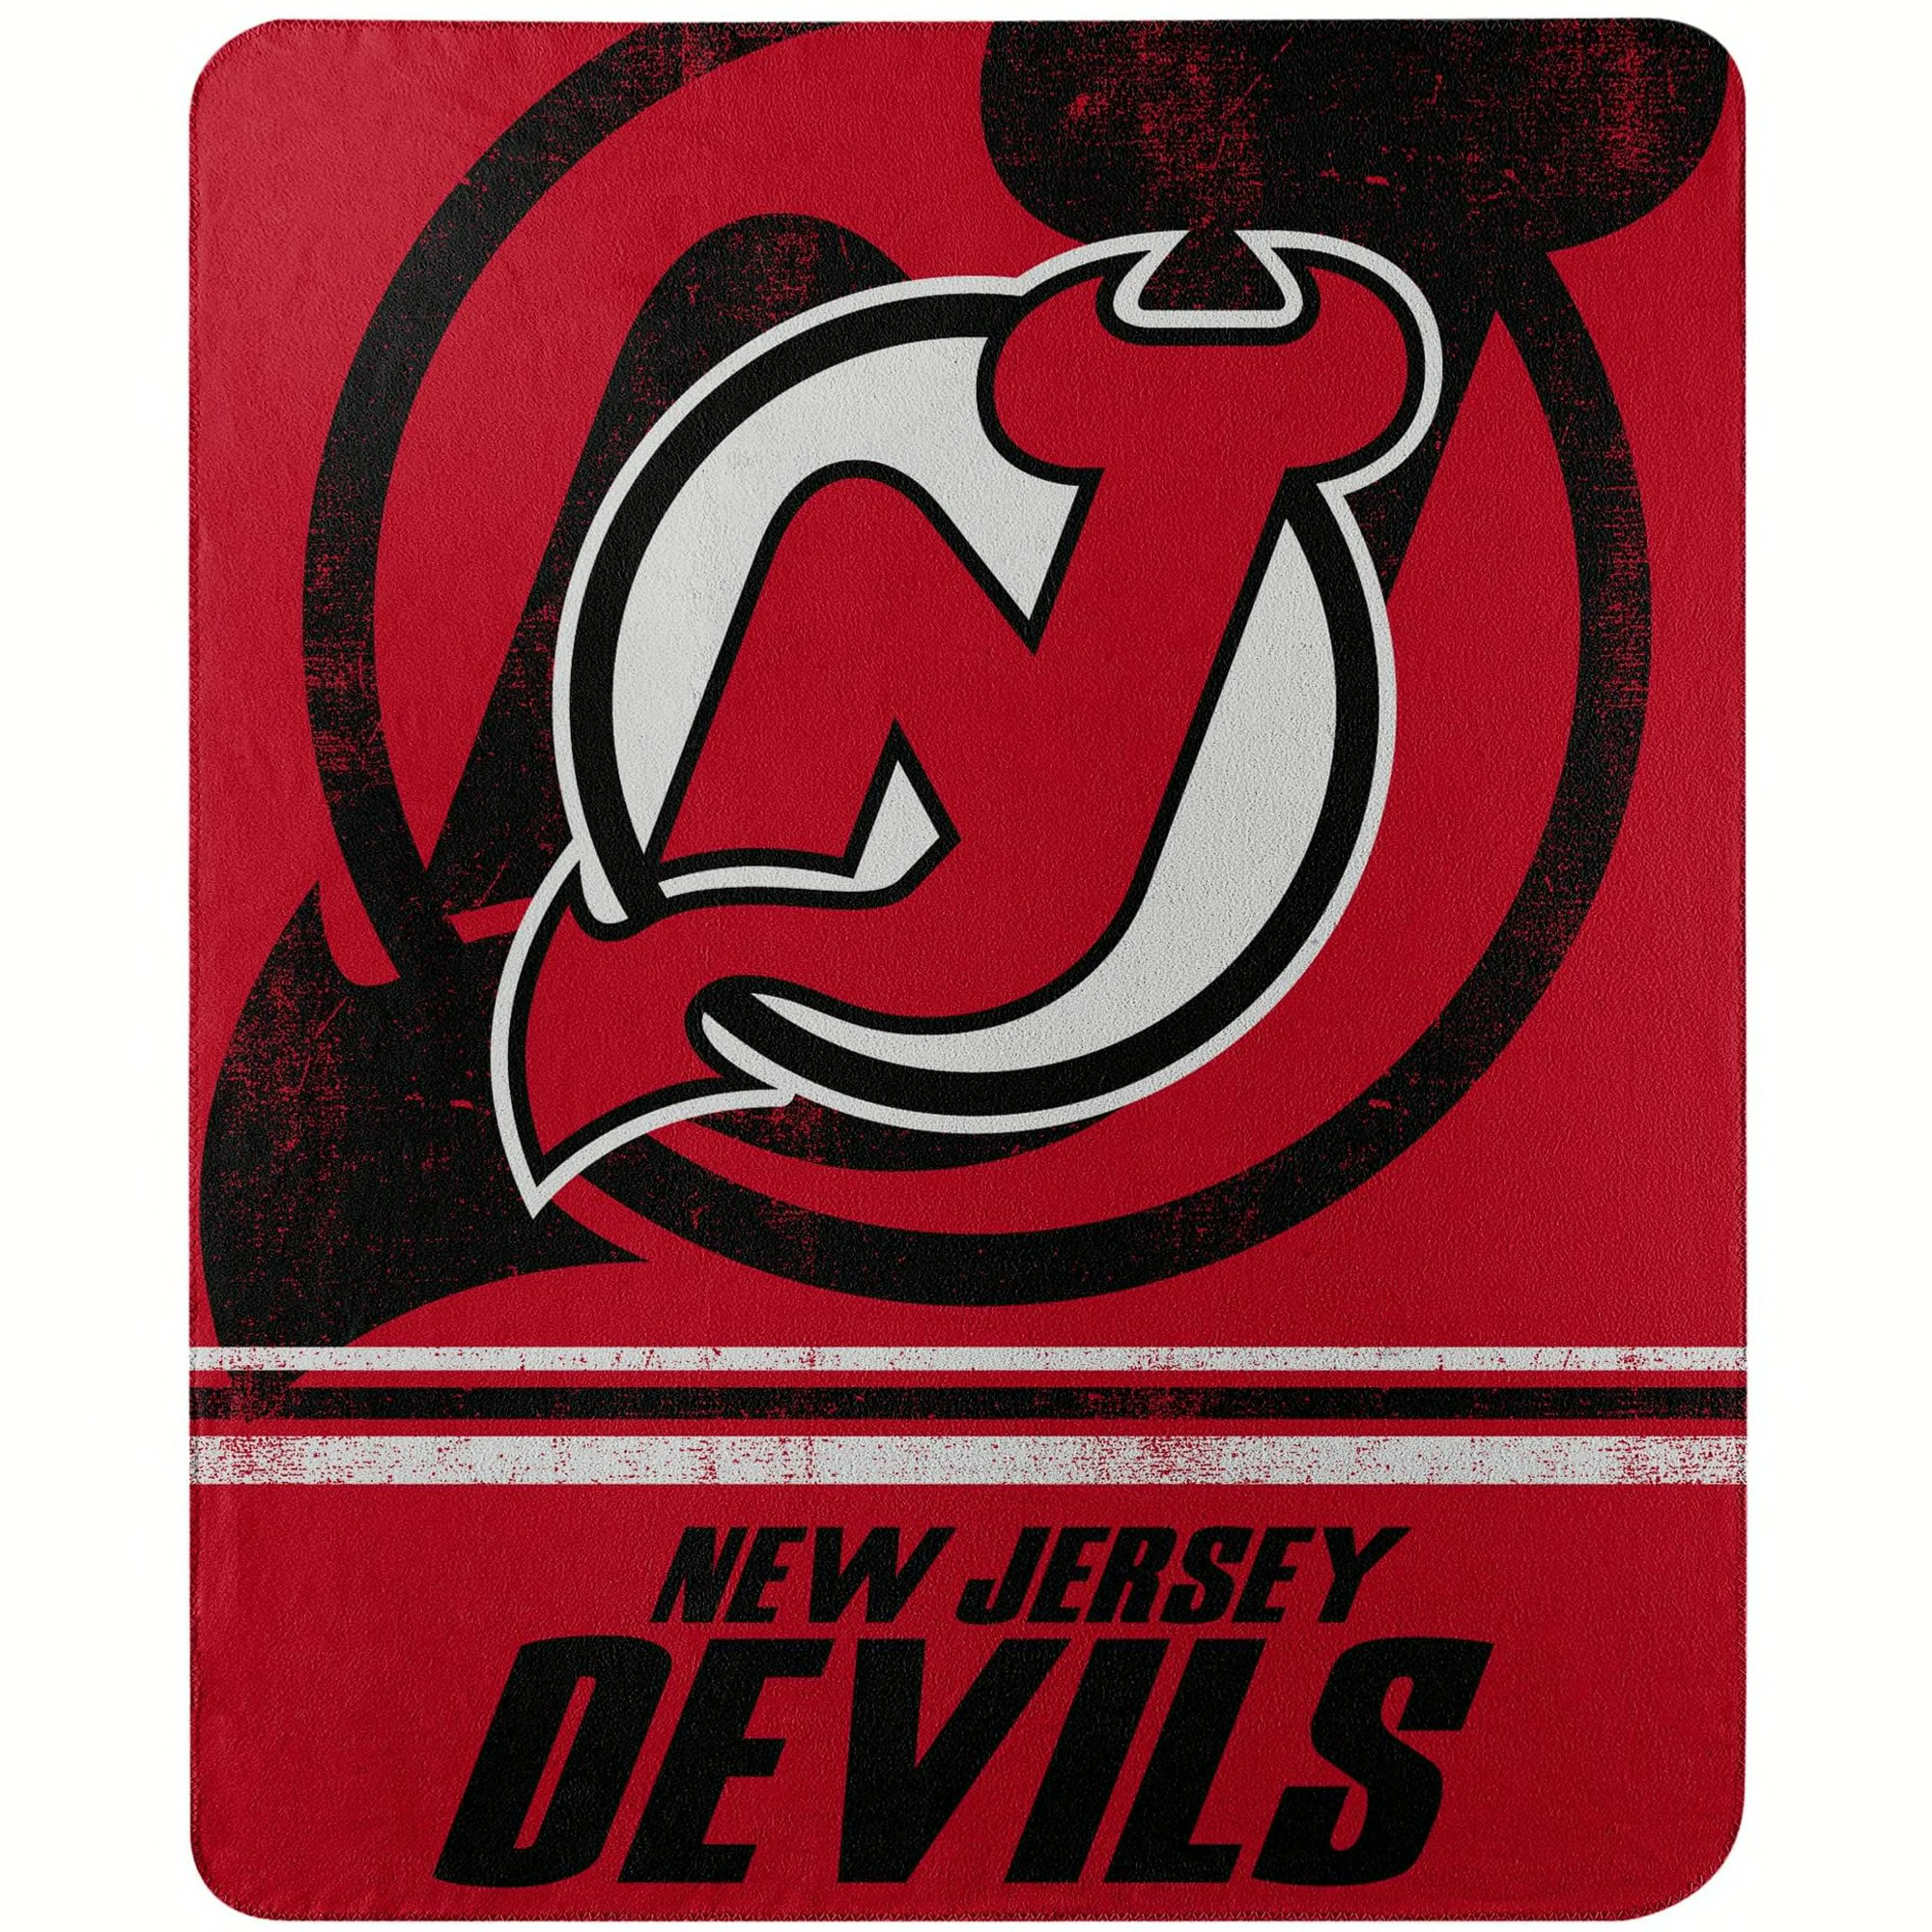 New Jersey Devils Holiday Santa Hat